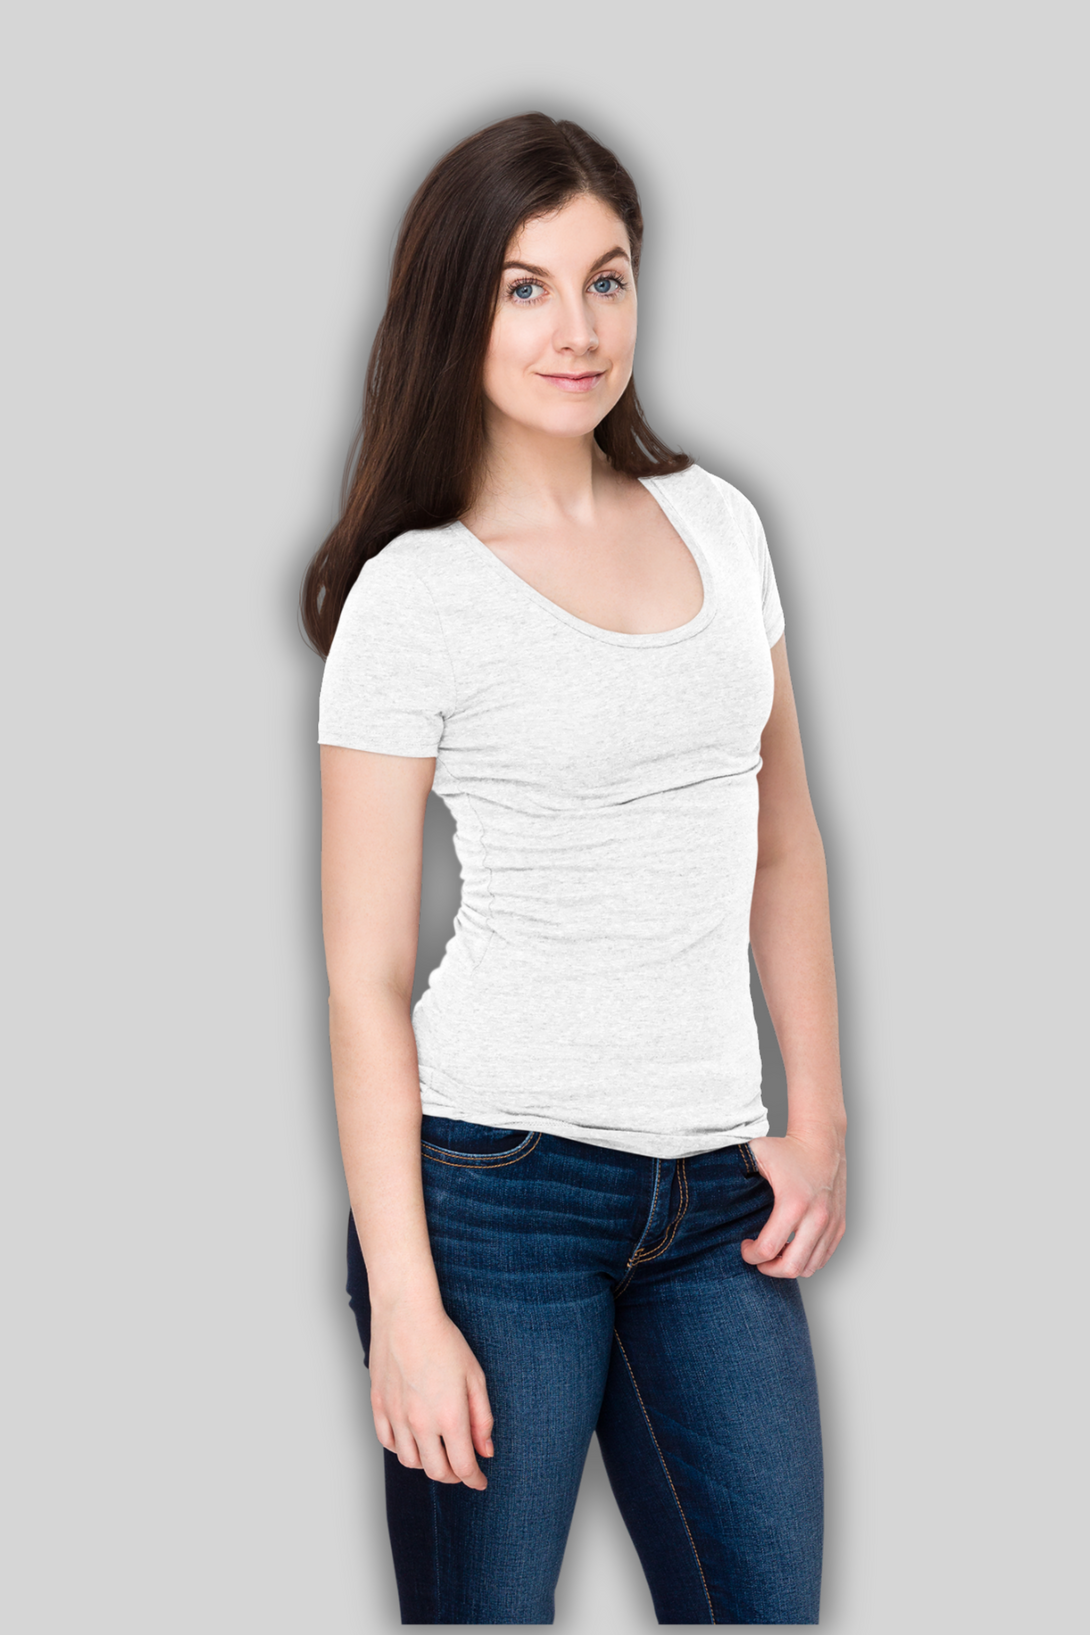 White Scoop Neck T-Shirt For Women - WowWaves - 3